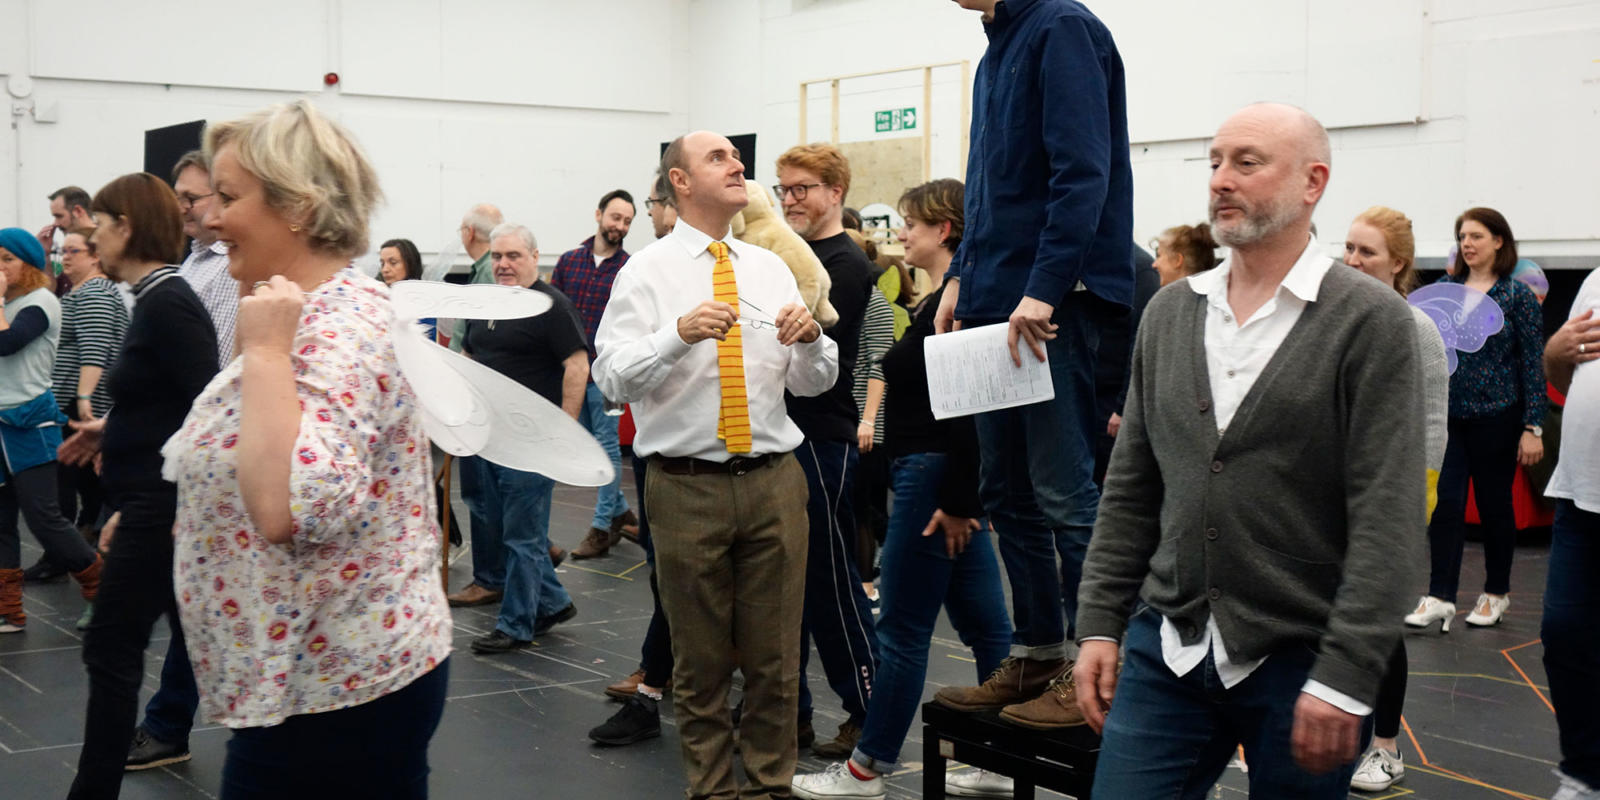 ENO Iolanthe: Director Cal McCrystal talking to Actor Richard Leeming